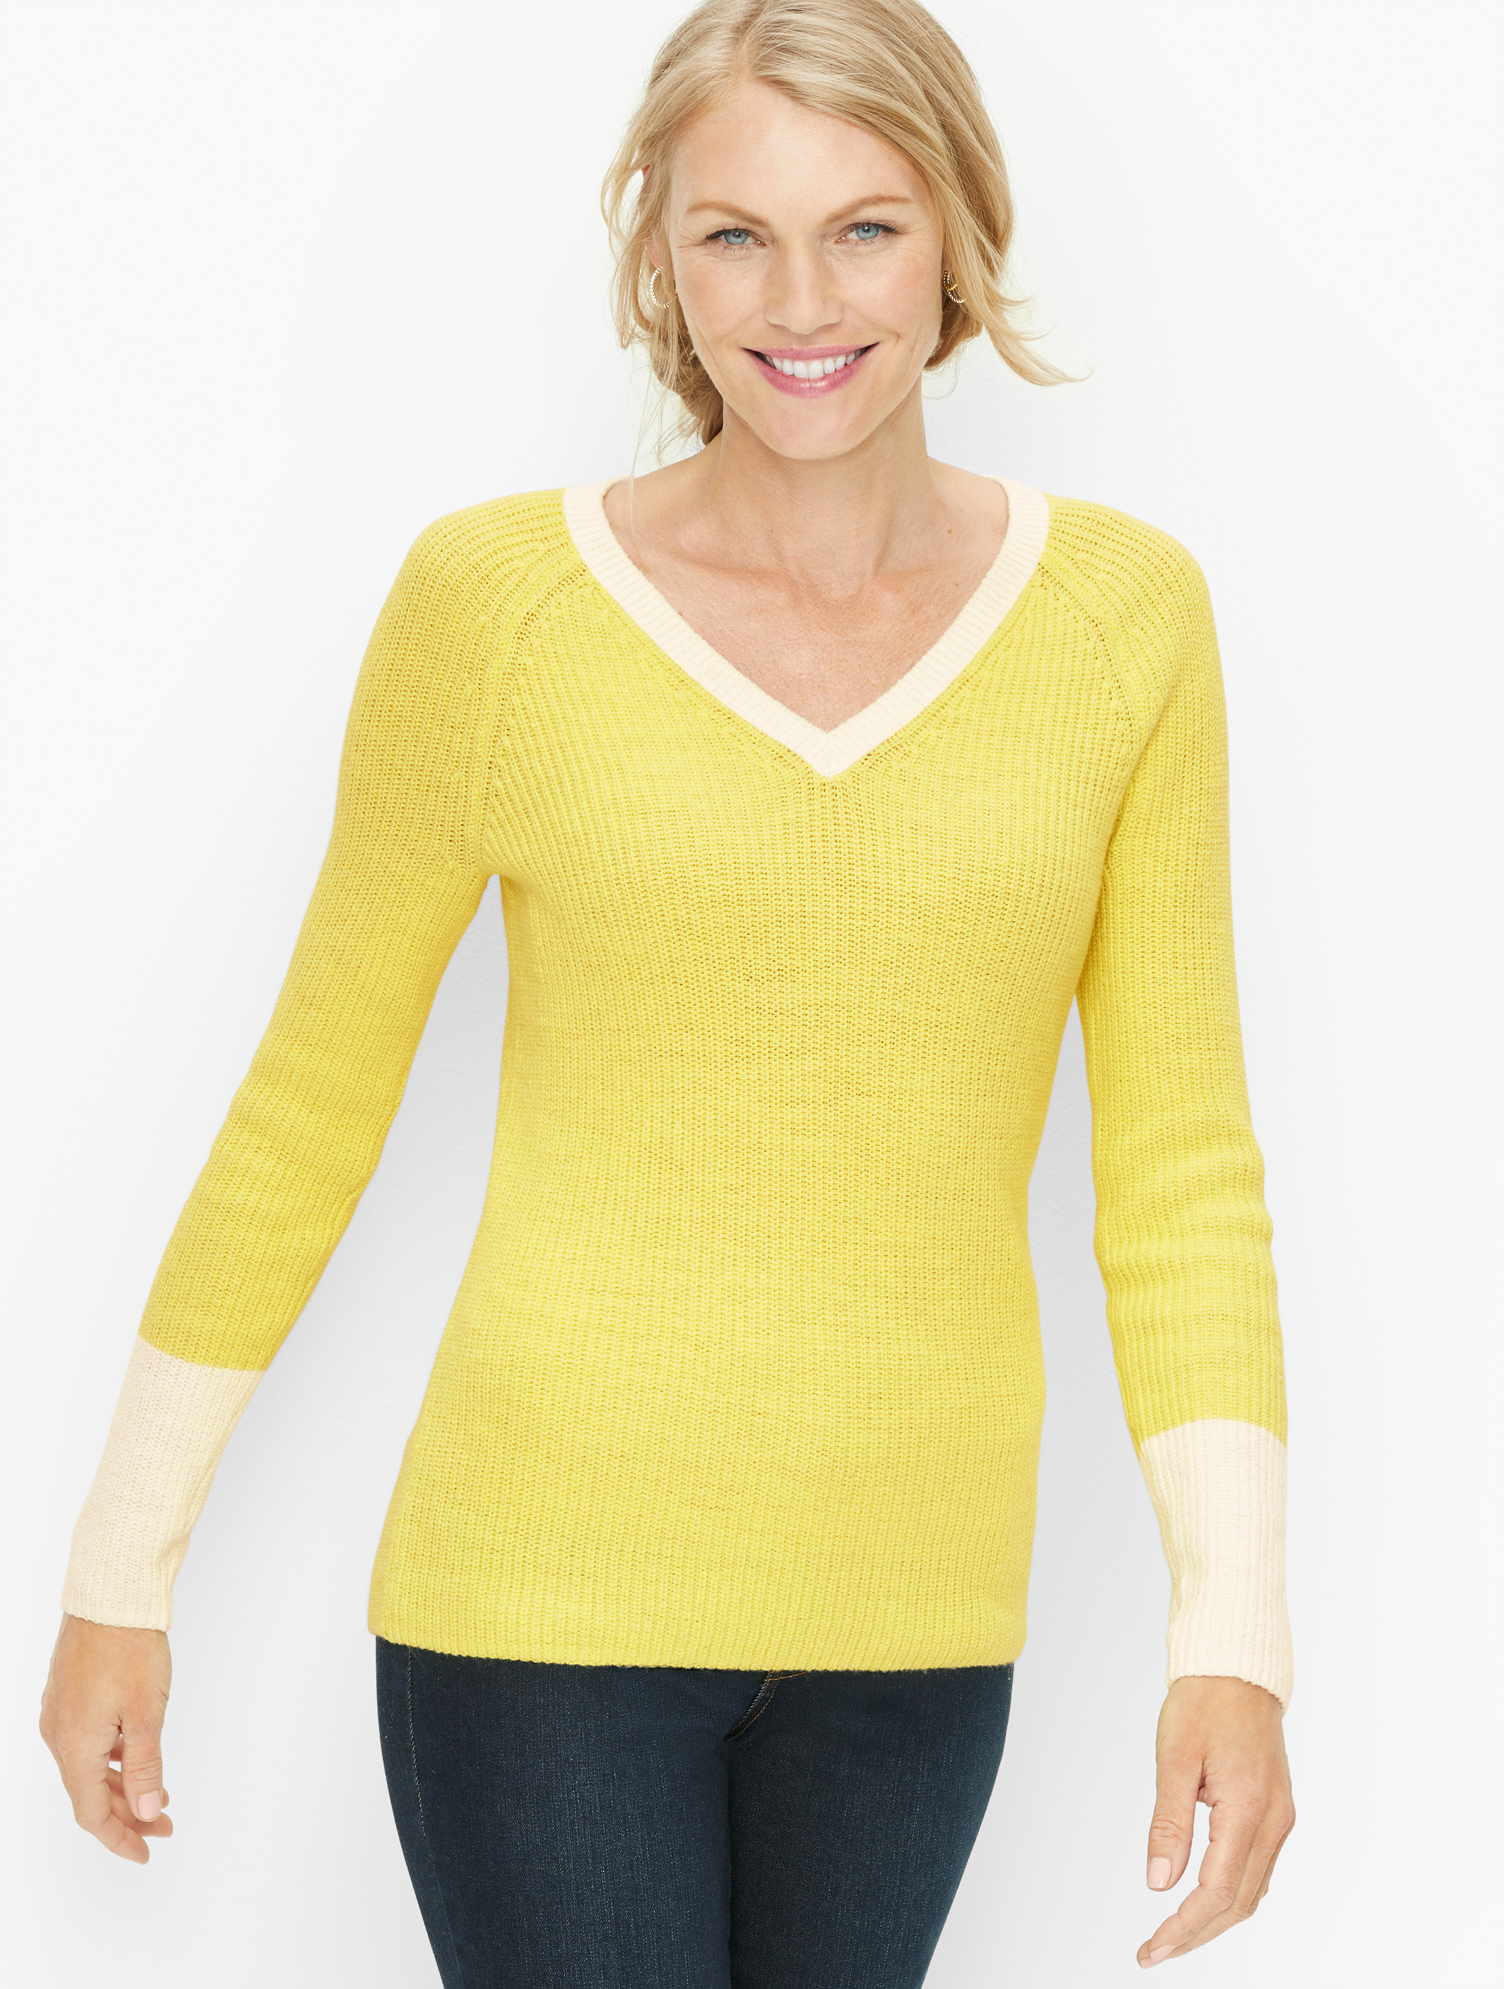 Talbots Petite - V-neck Pullover Sweater - Tipped - Yellow Chiffon - Xl